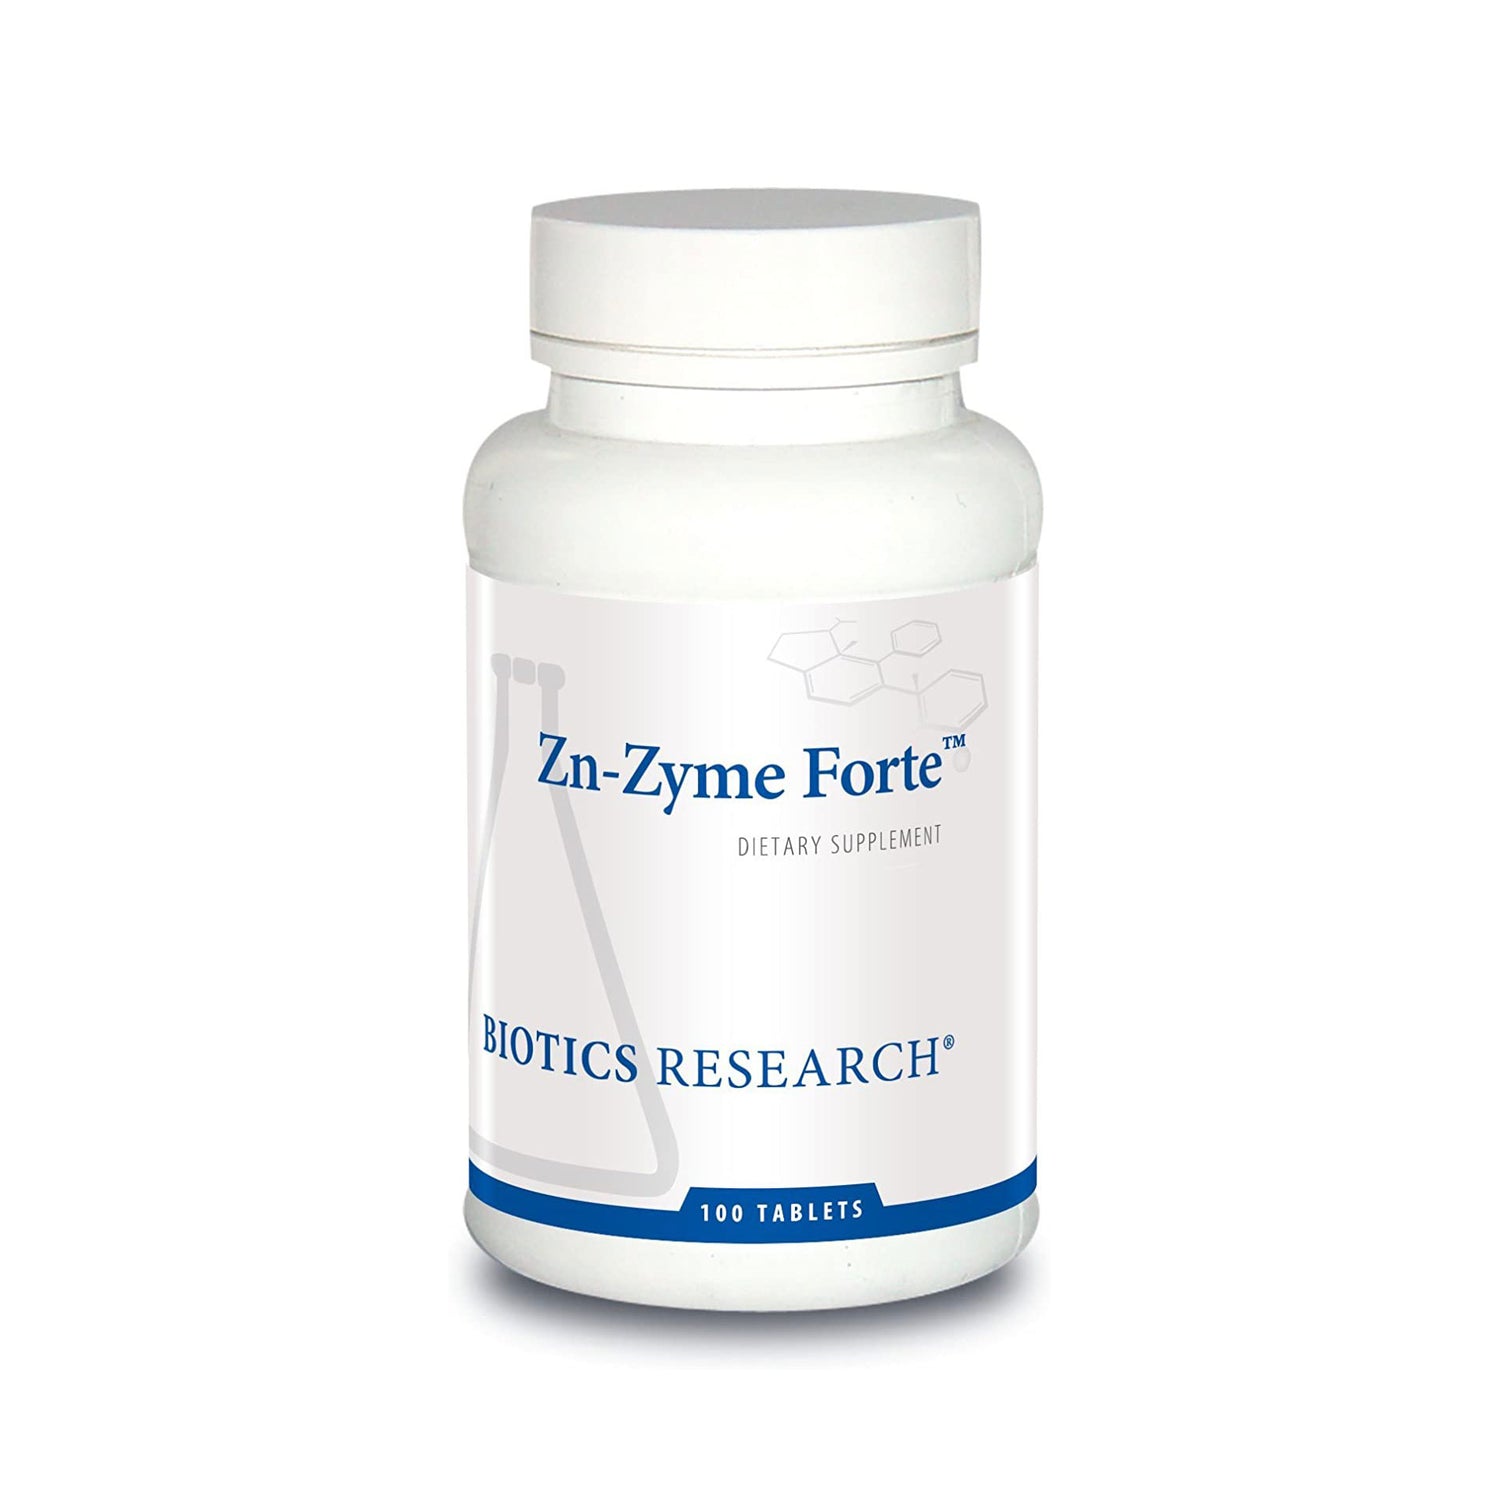 Biotics Research Zn-Zyme Forte